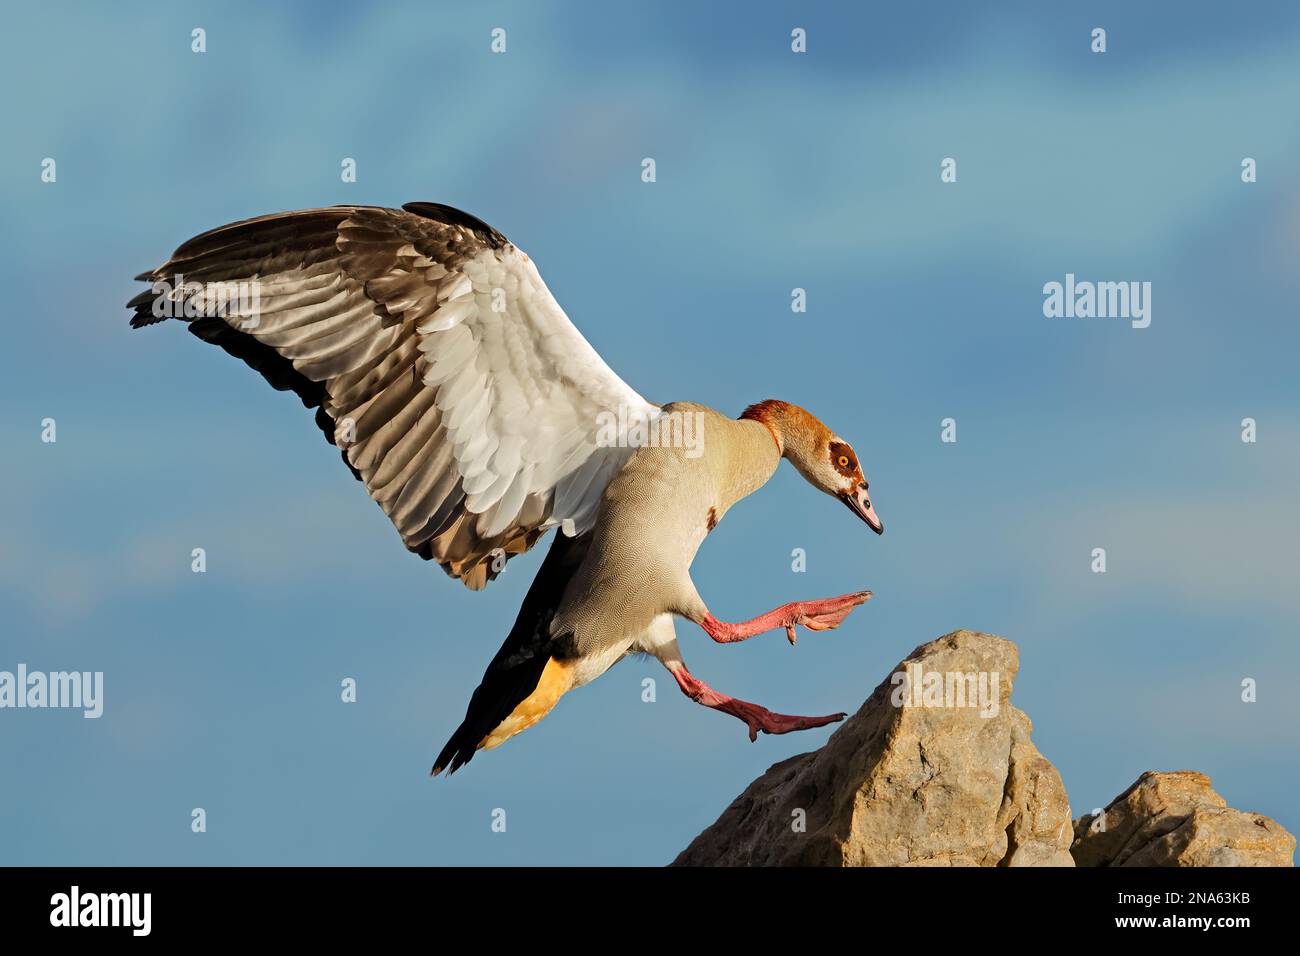 Un ganso egipcio (Alopochen aegyptiacus) aterrizando en una roca, Sudáfrica Foto de stock